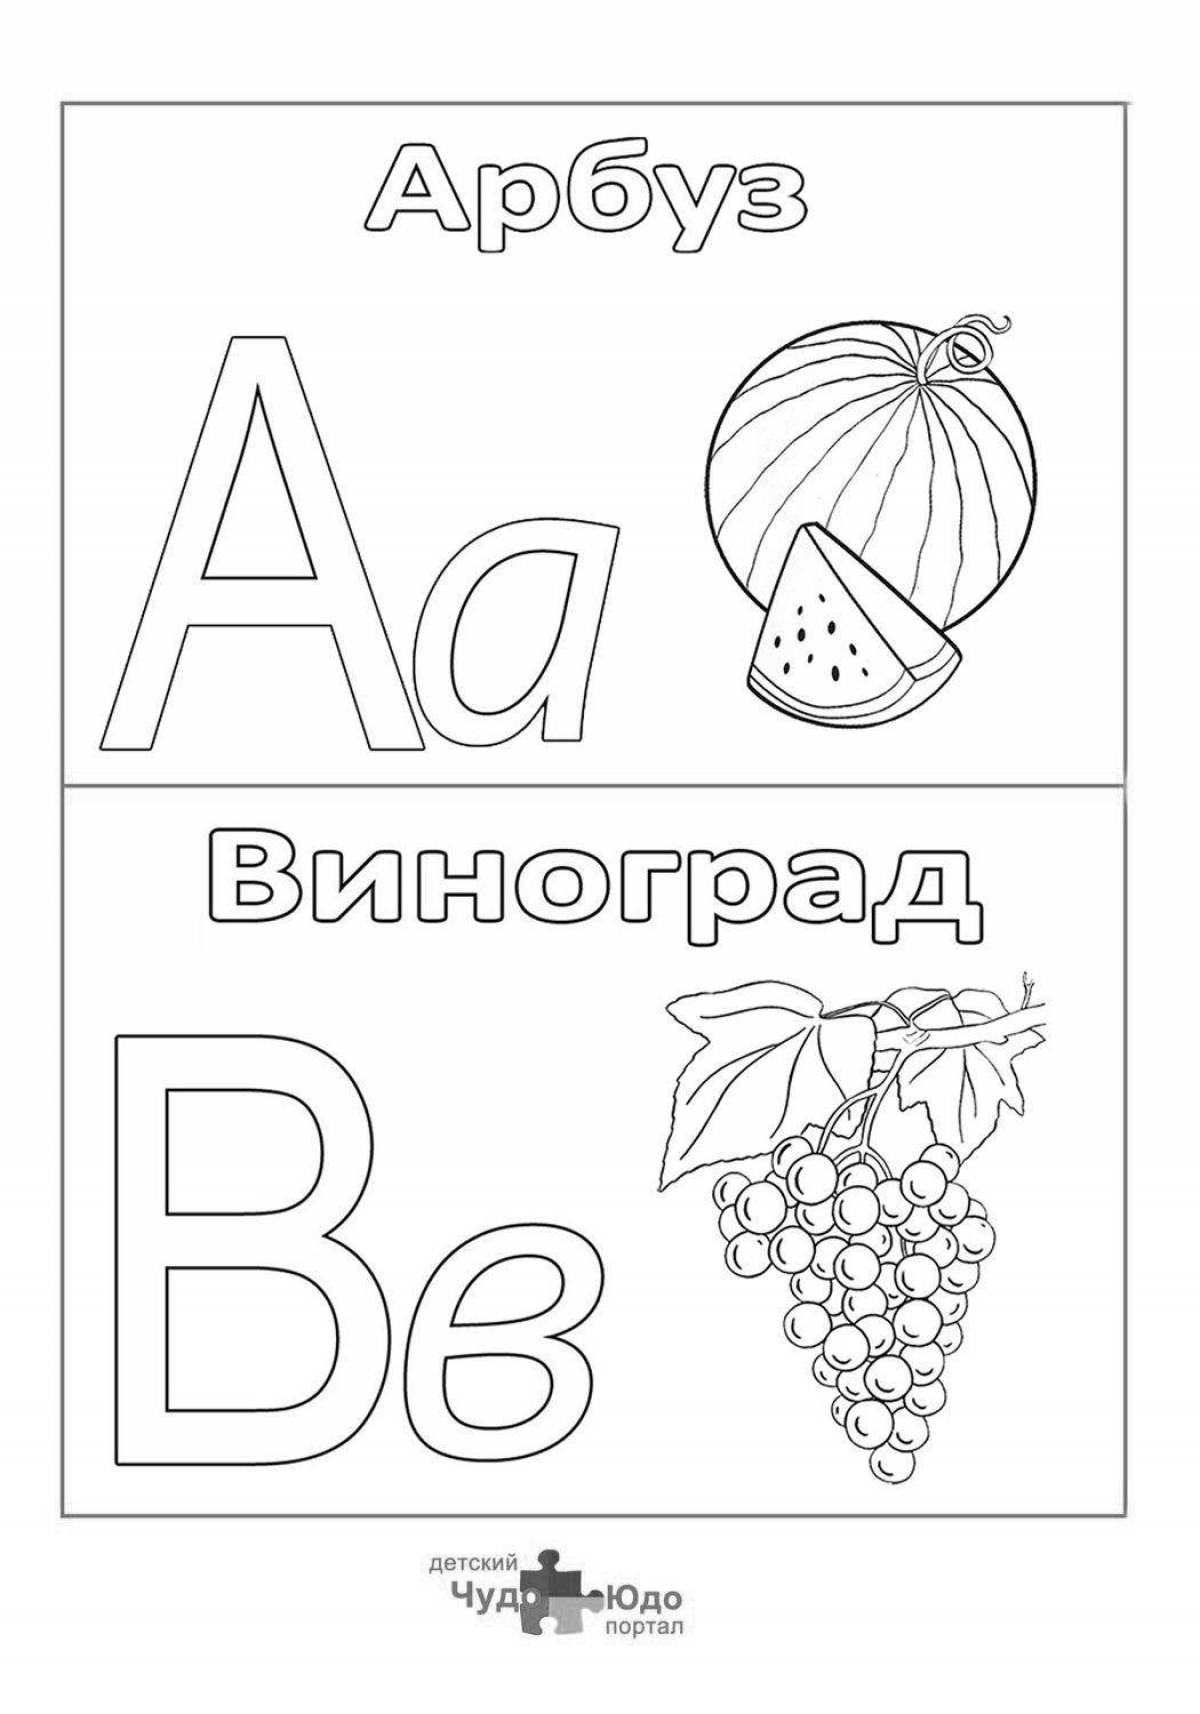 Fun coloring of the Kazakh alphabet